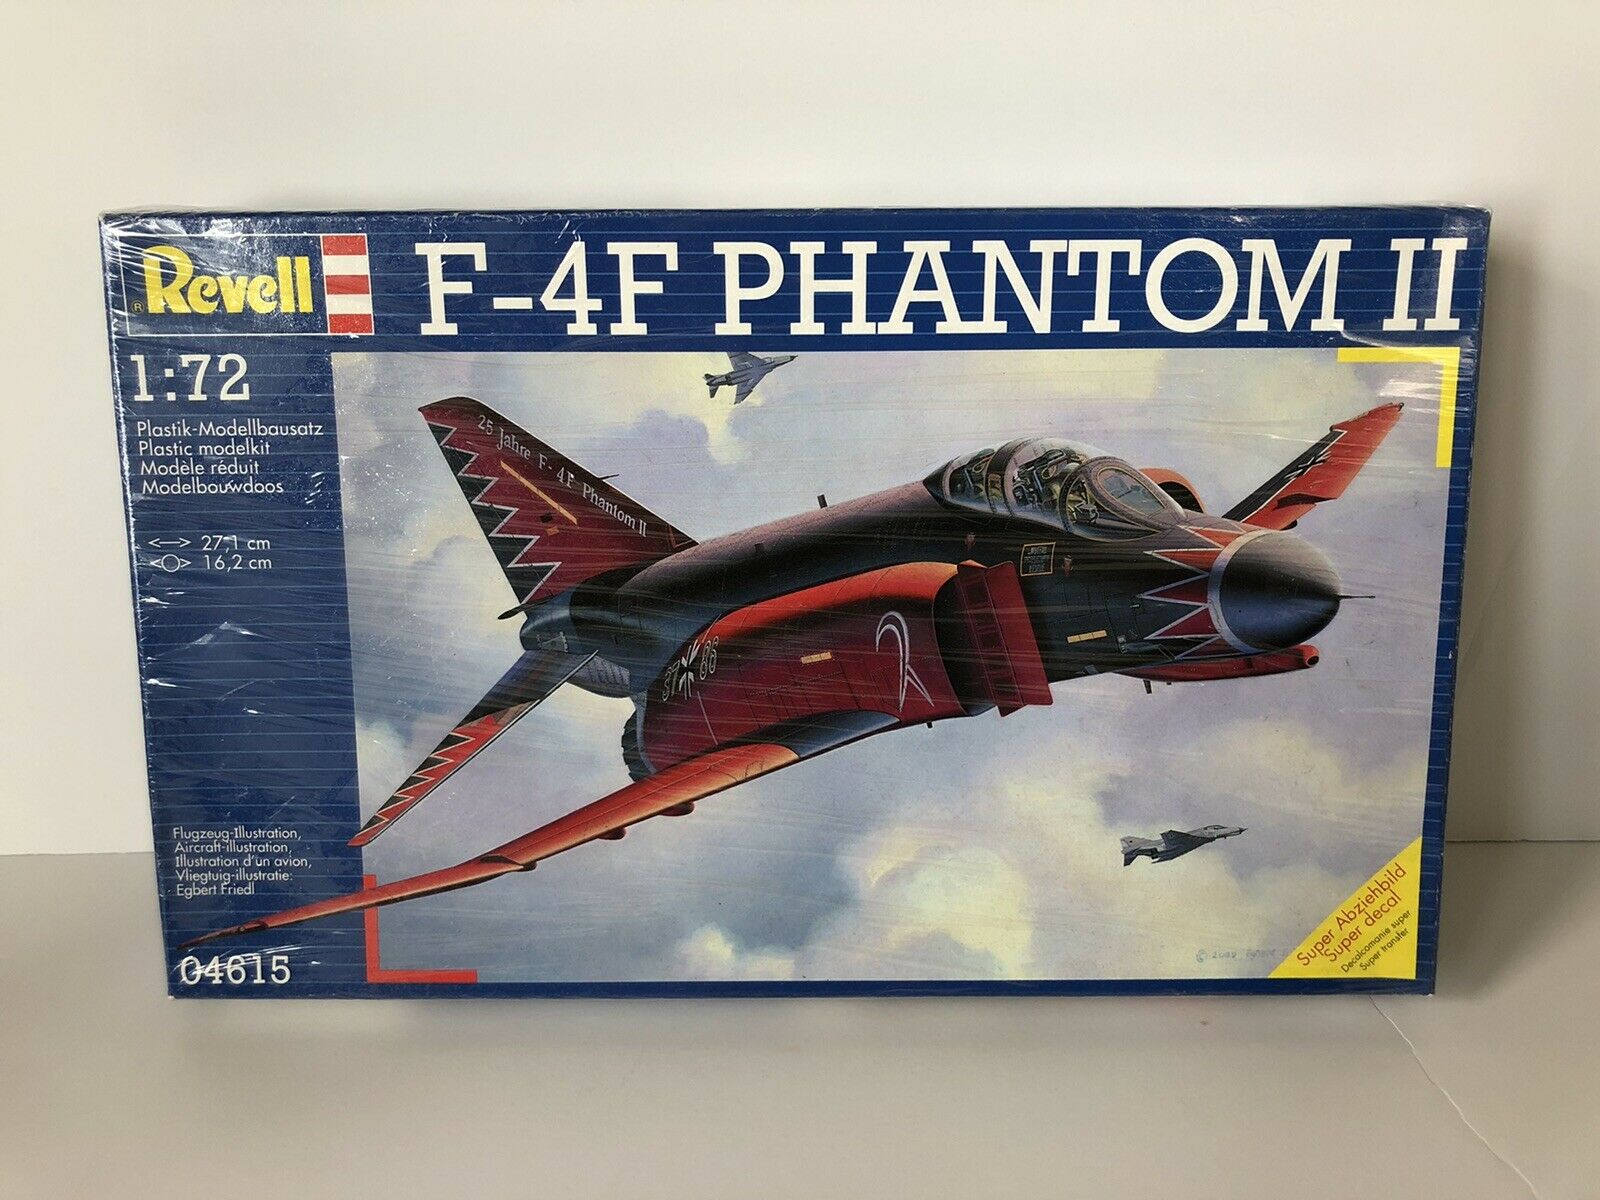 F-4f Phantom Ii - Revell - 1/72 - Box Opened